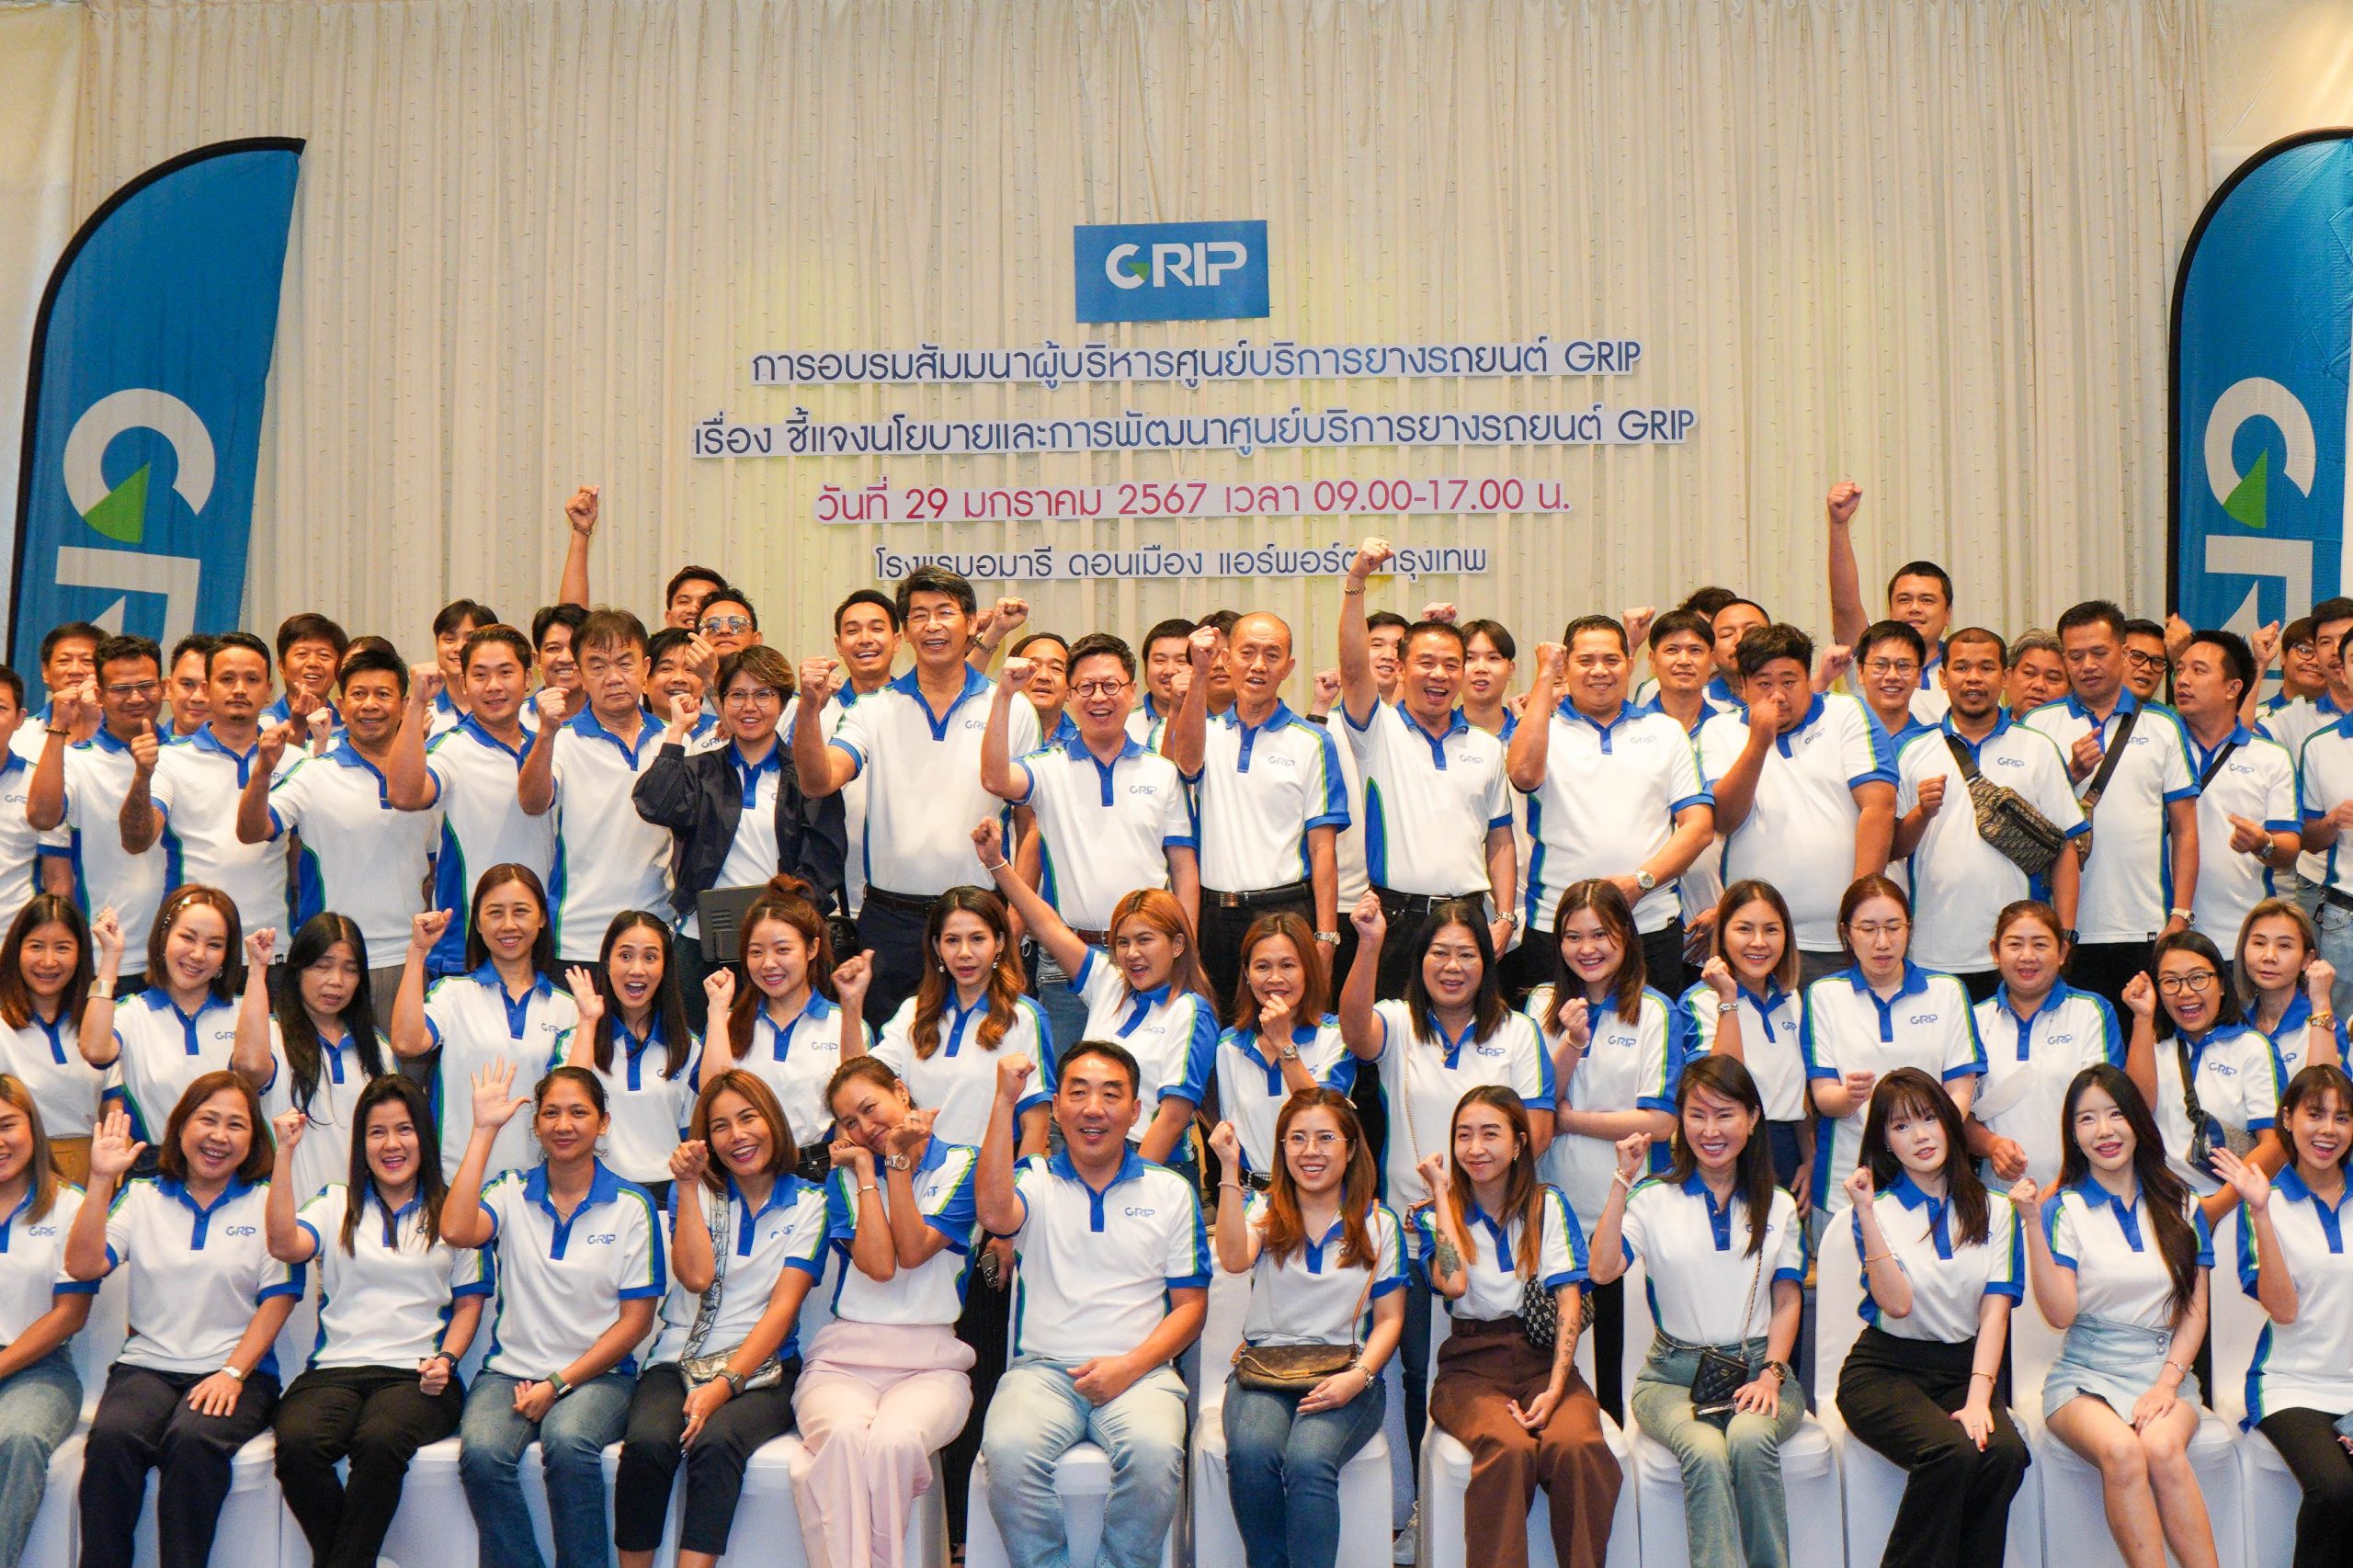 GRIP เดินหน้าพัฒนาศักยภาพบริการมุ่งสู่ 150 สาขาทั่วไทย แถลงกลยุทธ์ 1 GRIP